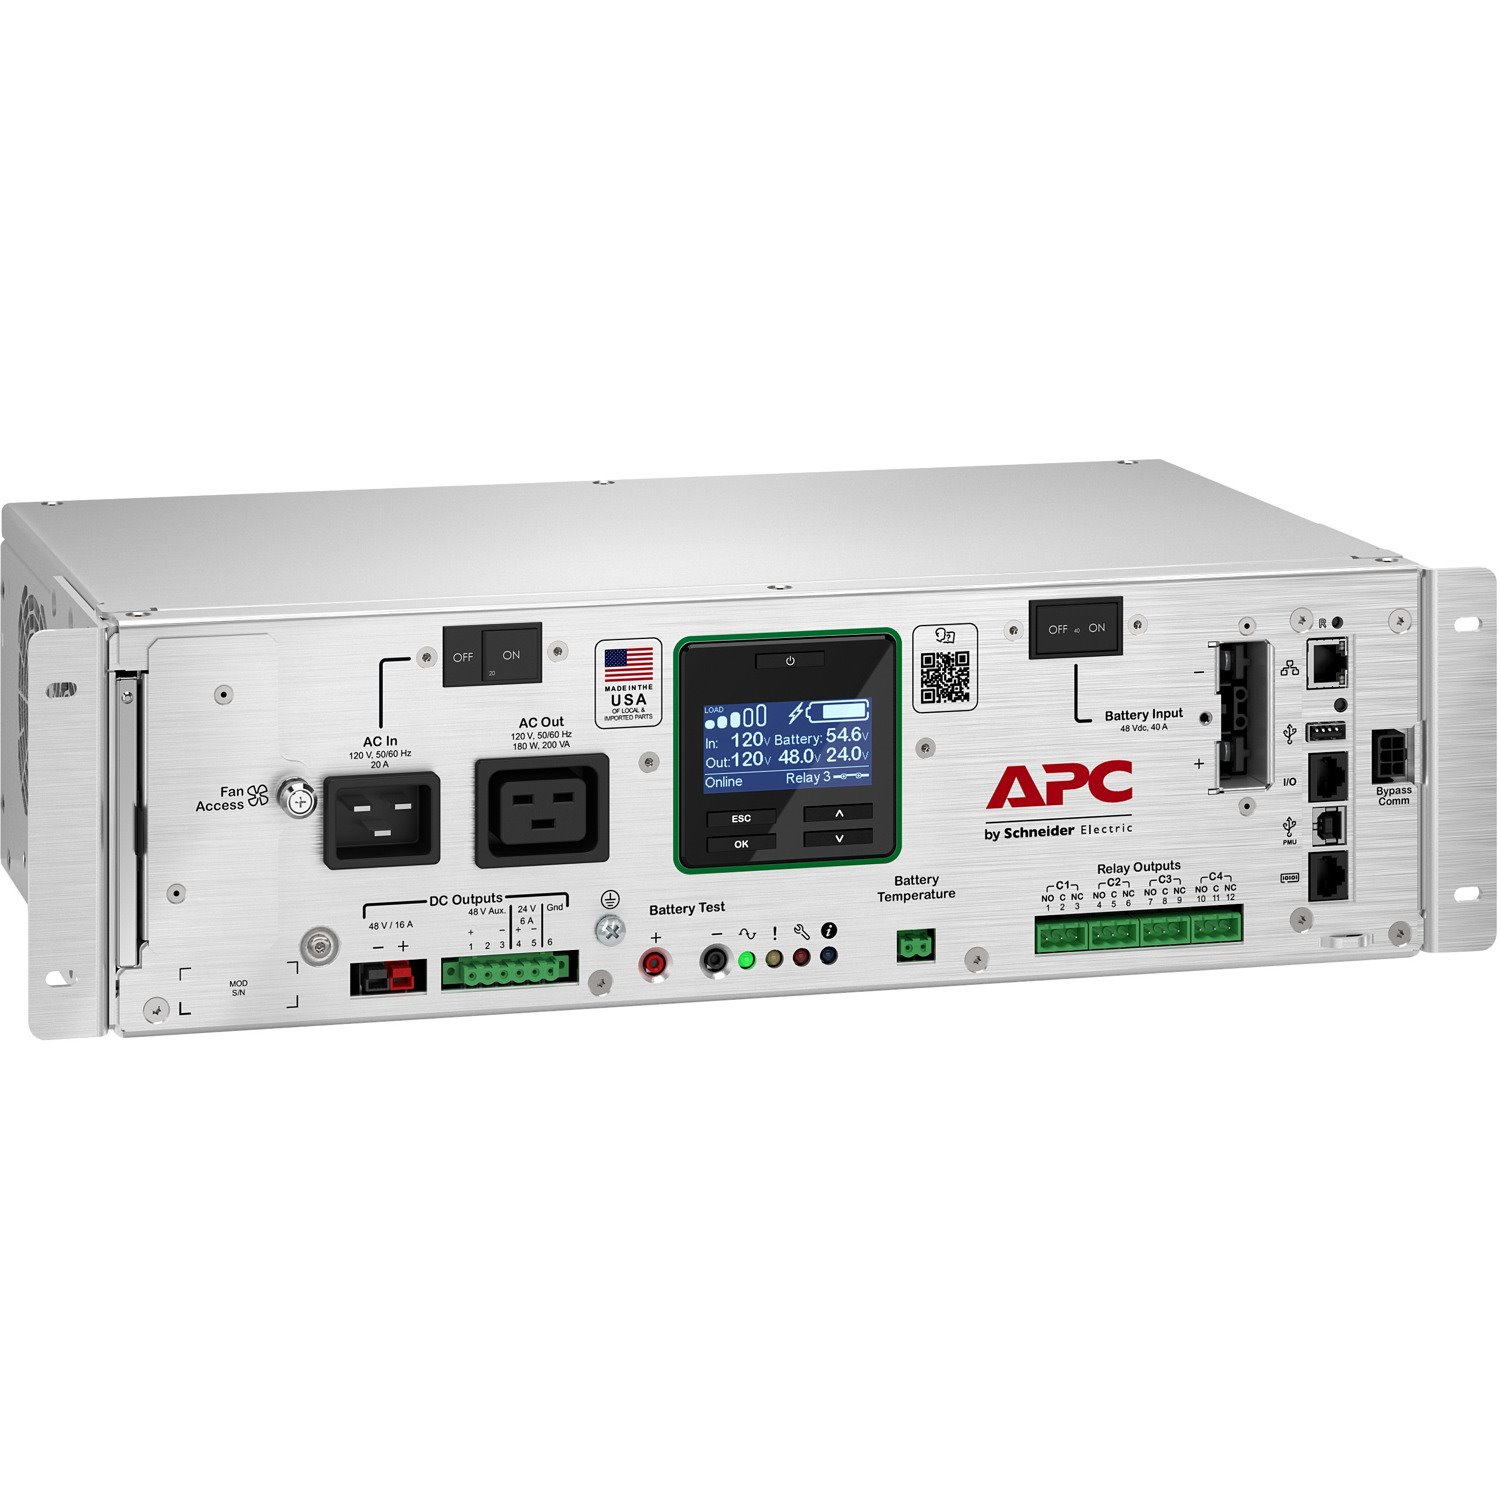 APC by Schneider Electric SecureUPS XP1K9NN42RCC Desktop UPS